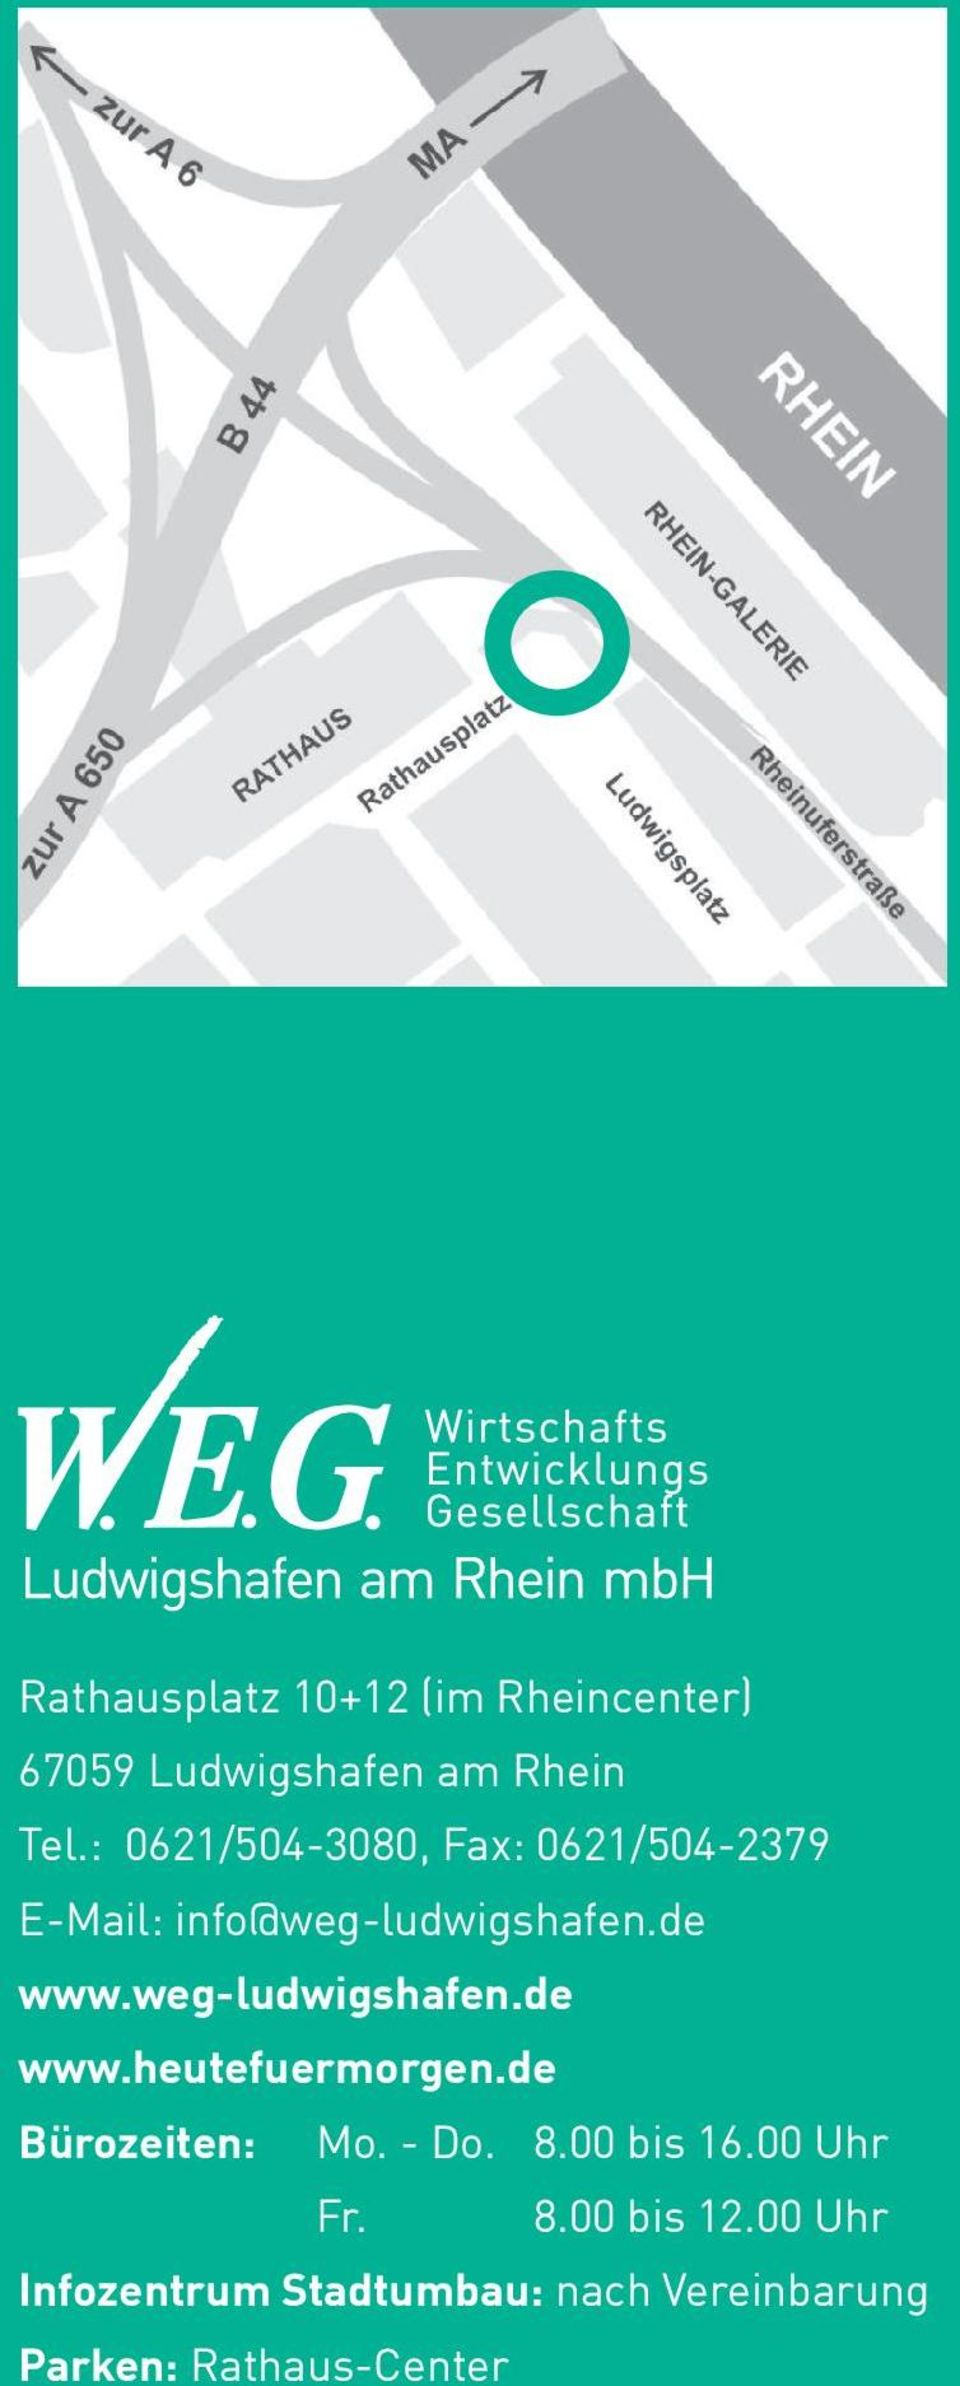 weg-ludwigshafen.de www.heutefuermorgen.de Bürozeiten: Mo. - Do. 8.00 bis 16.